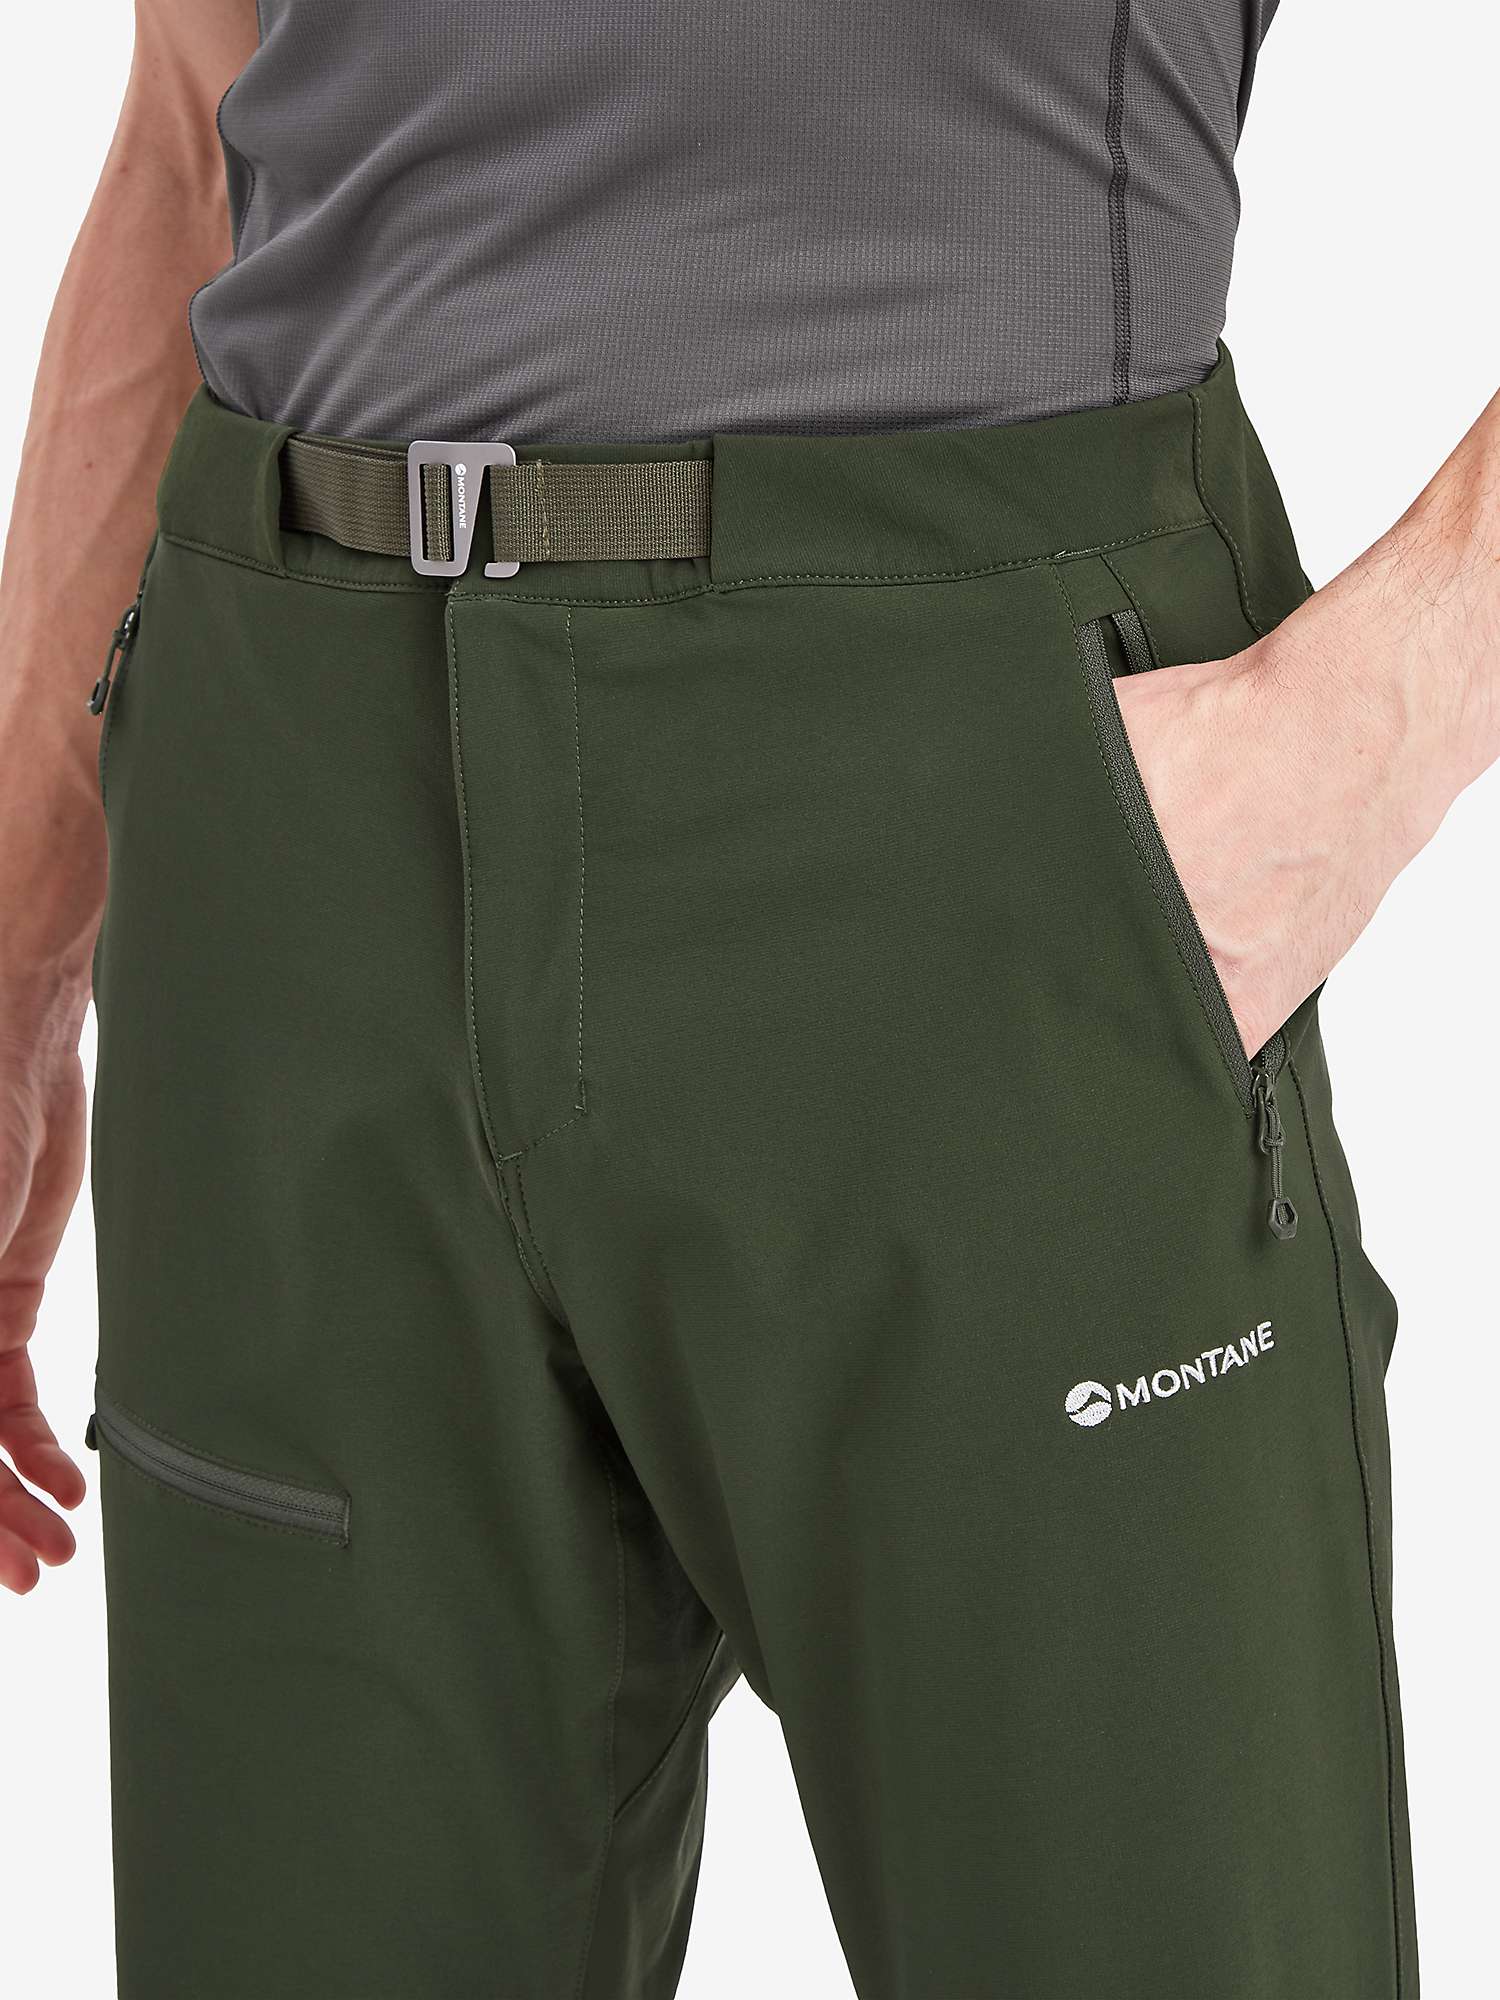 Buy Montane Tenacity Hiking Trousers Online at johnlewis.com